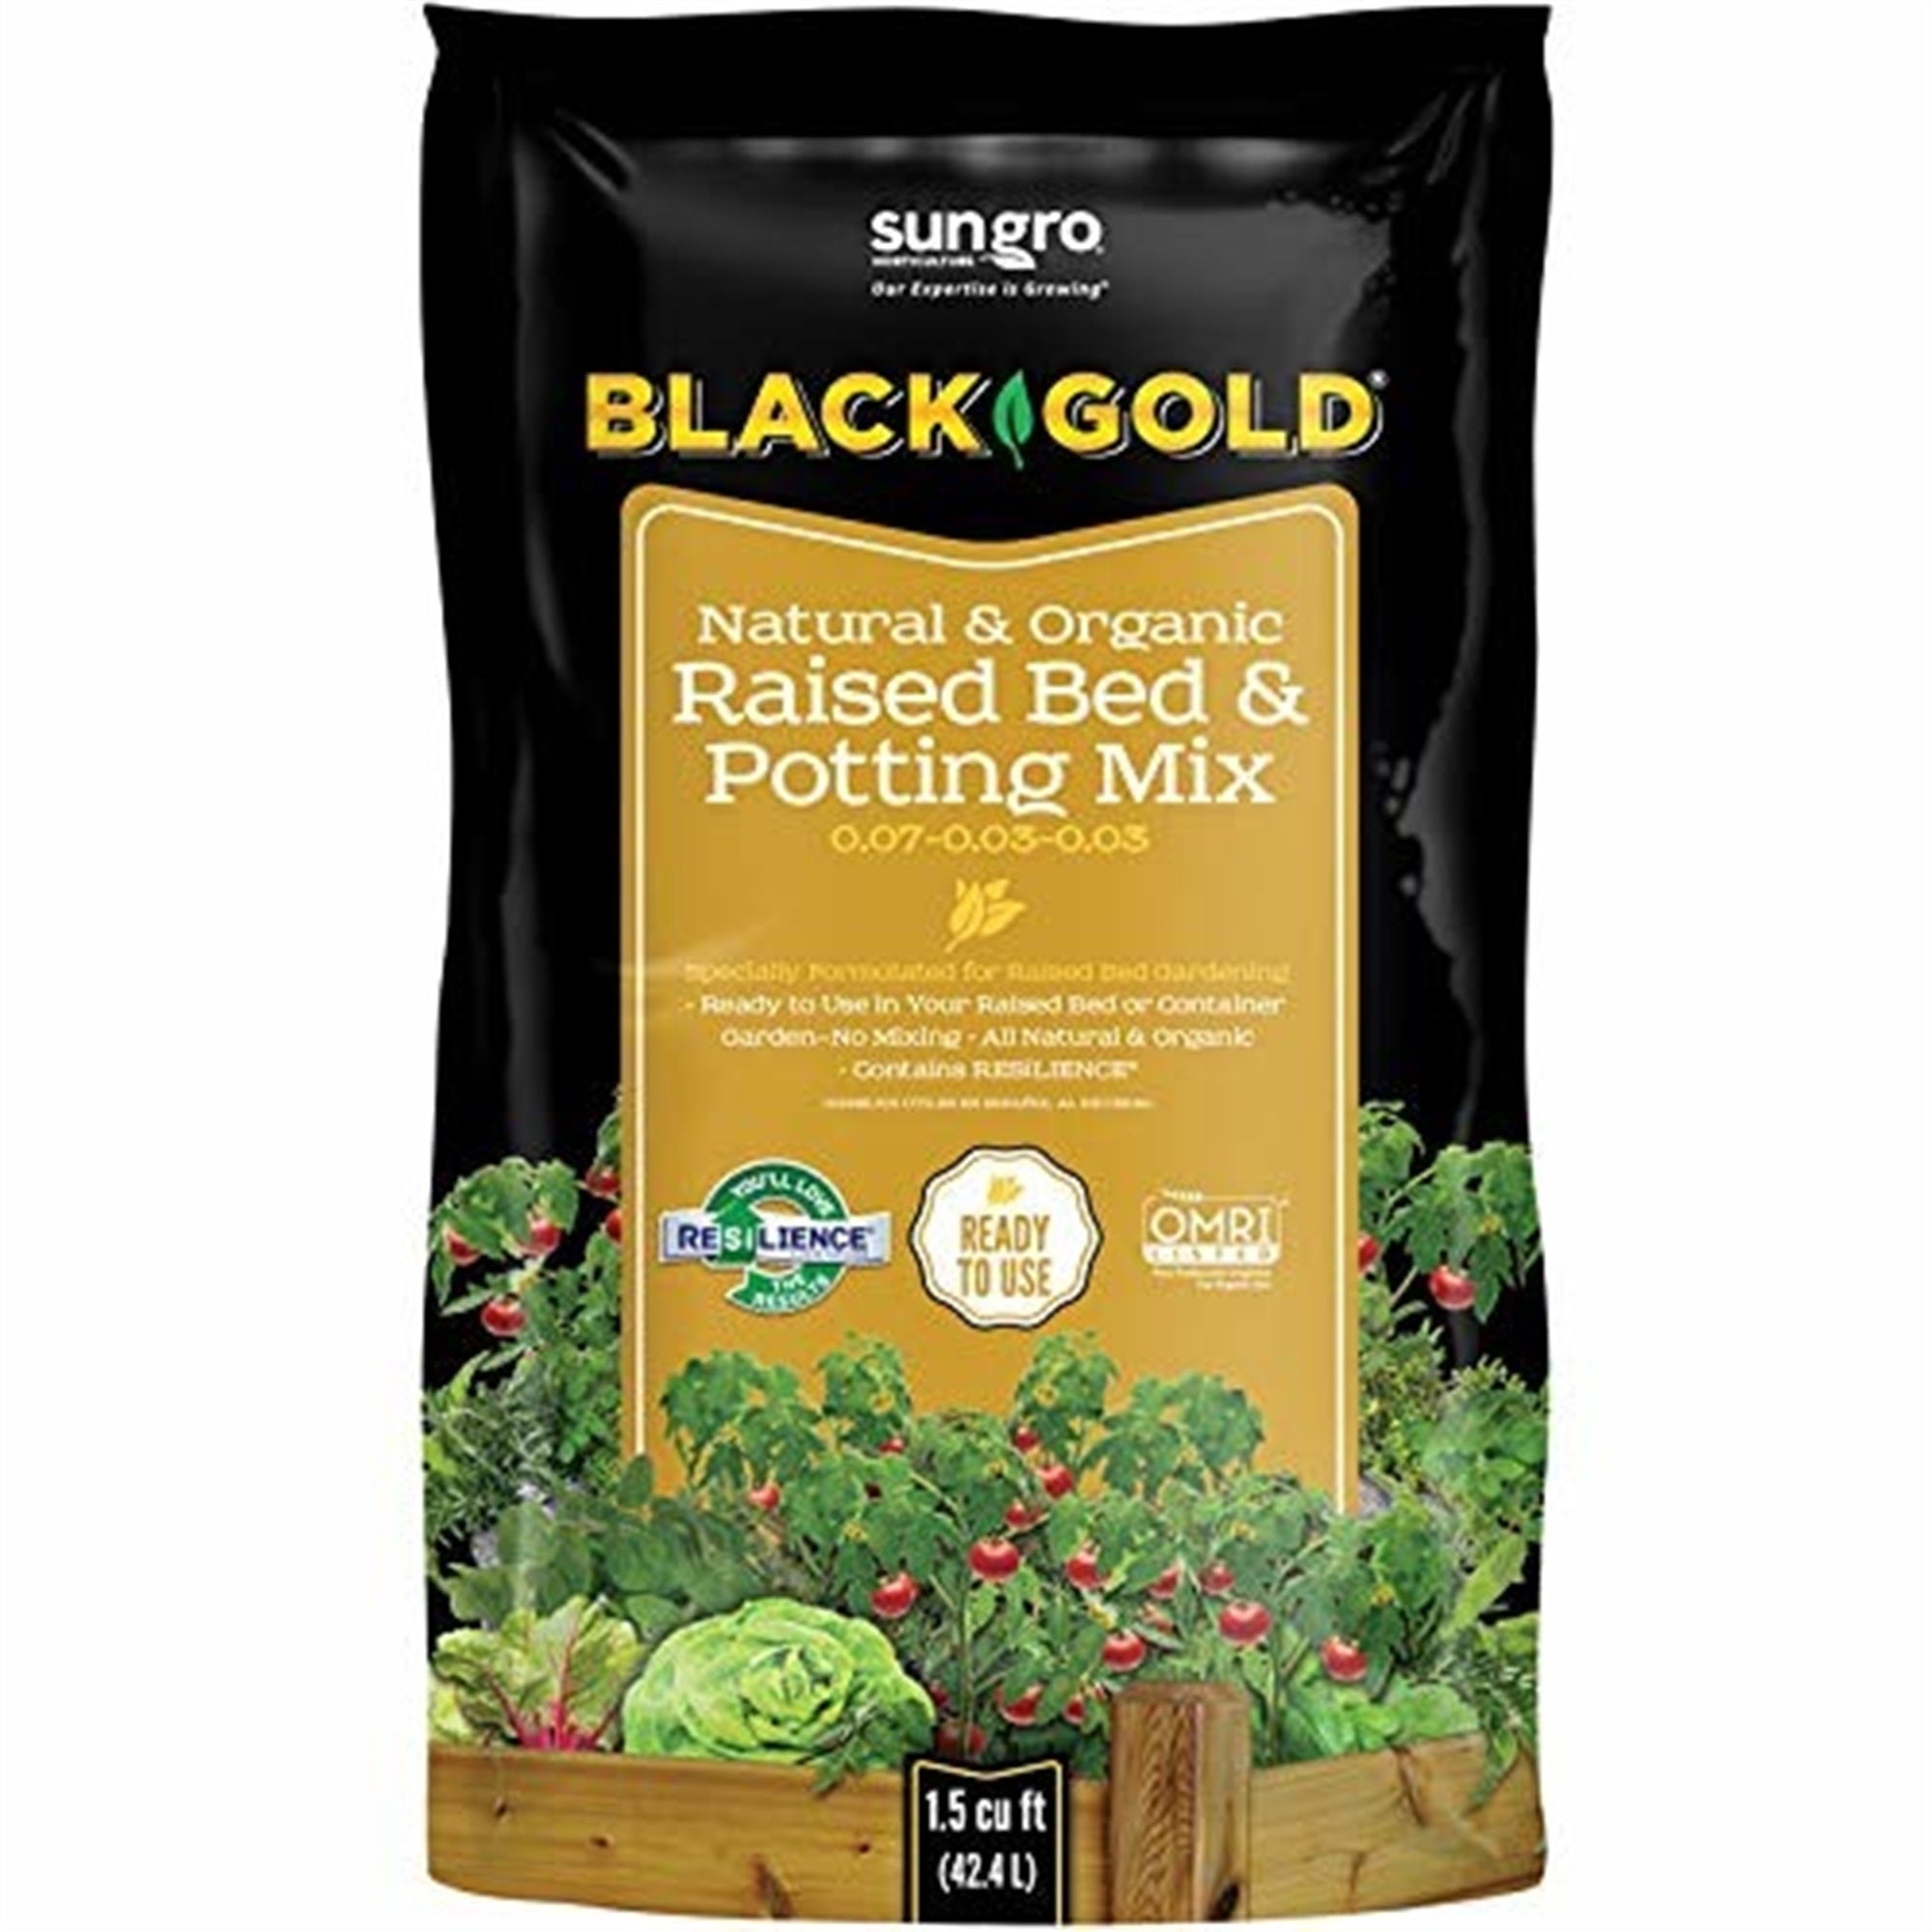 Black Gold Natural & Organic Raised Bed & Potting Mix, 1.5 Cu Ft